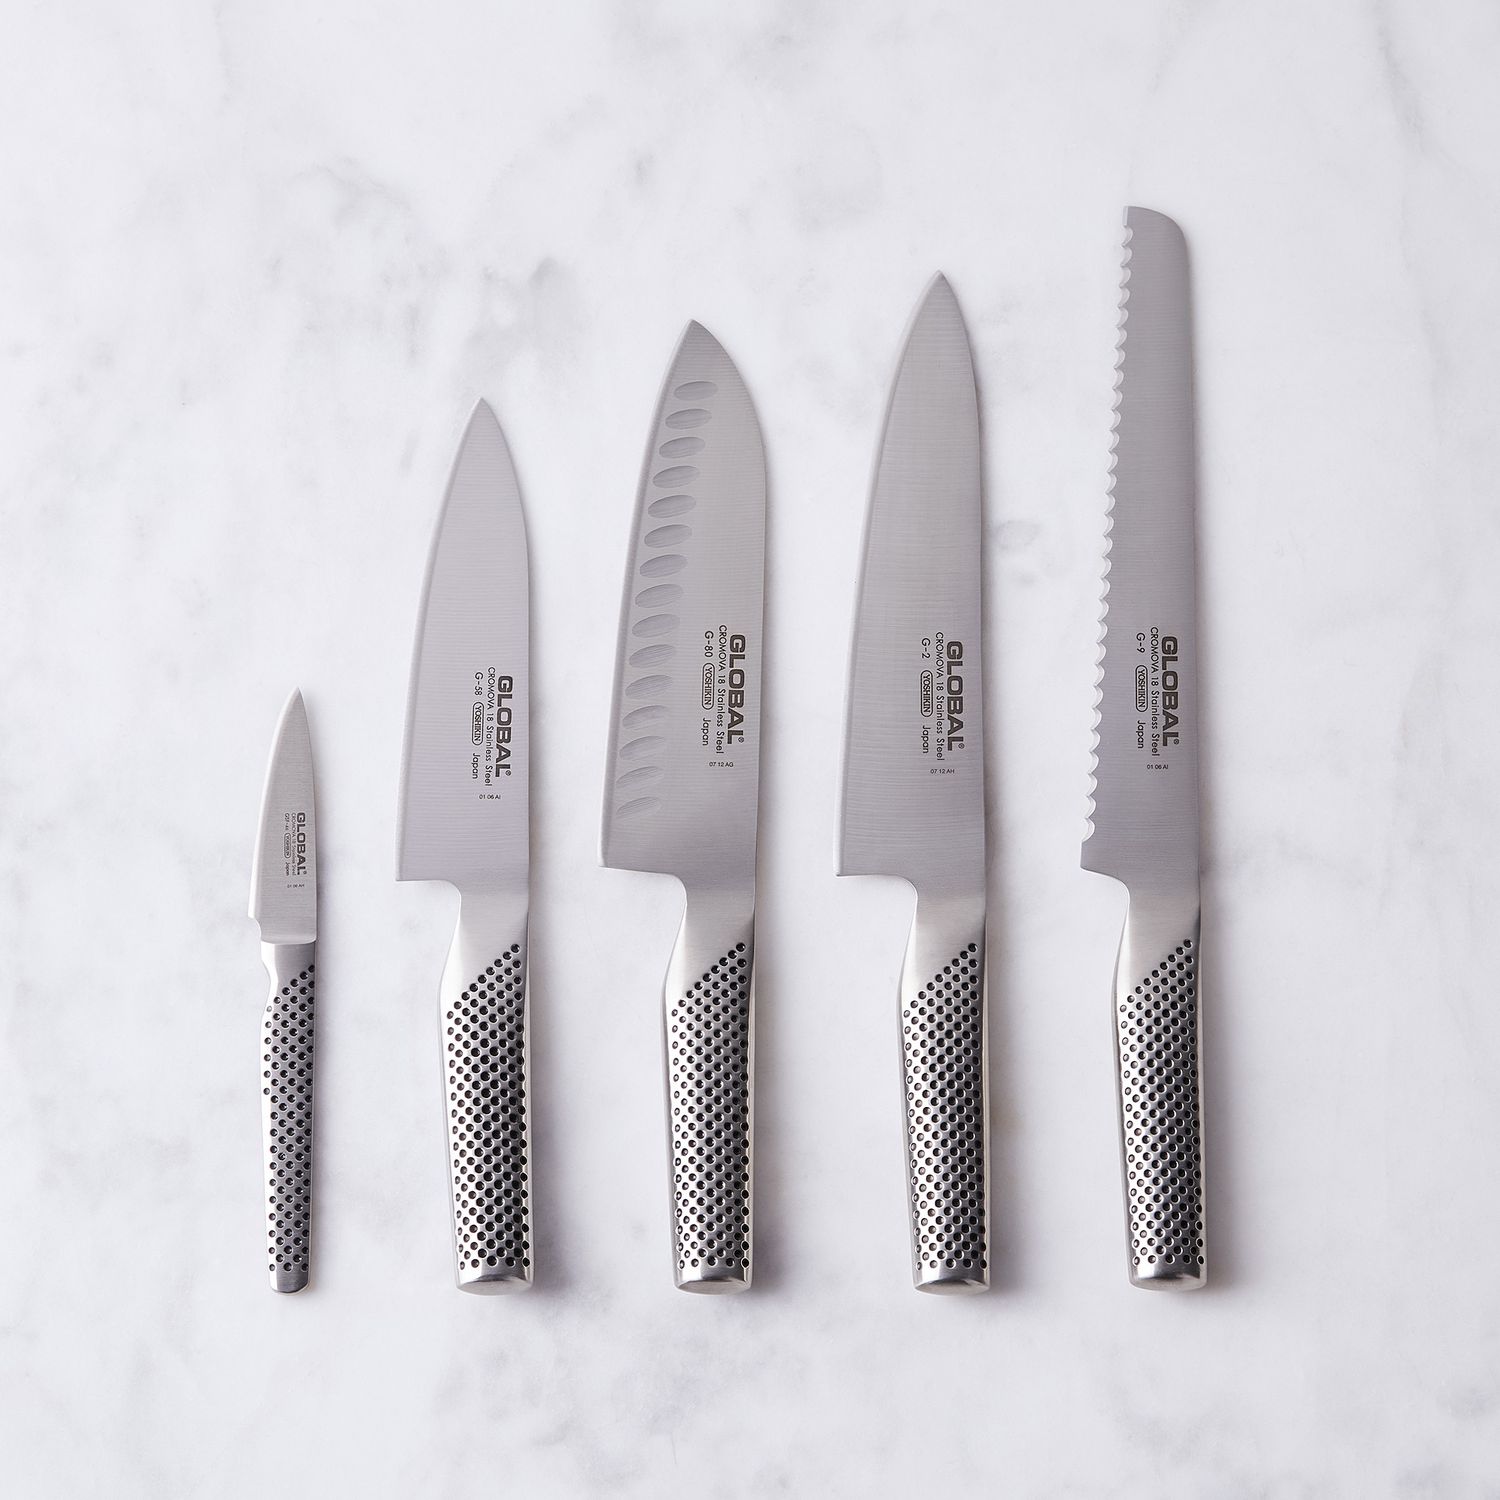  Global 4-Piece Knife Set: Home & Kitchen